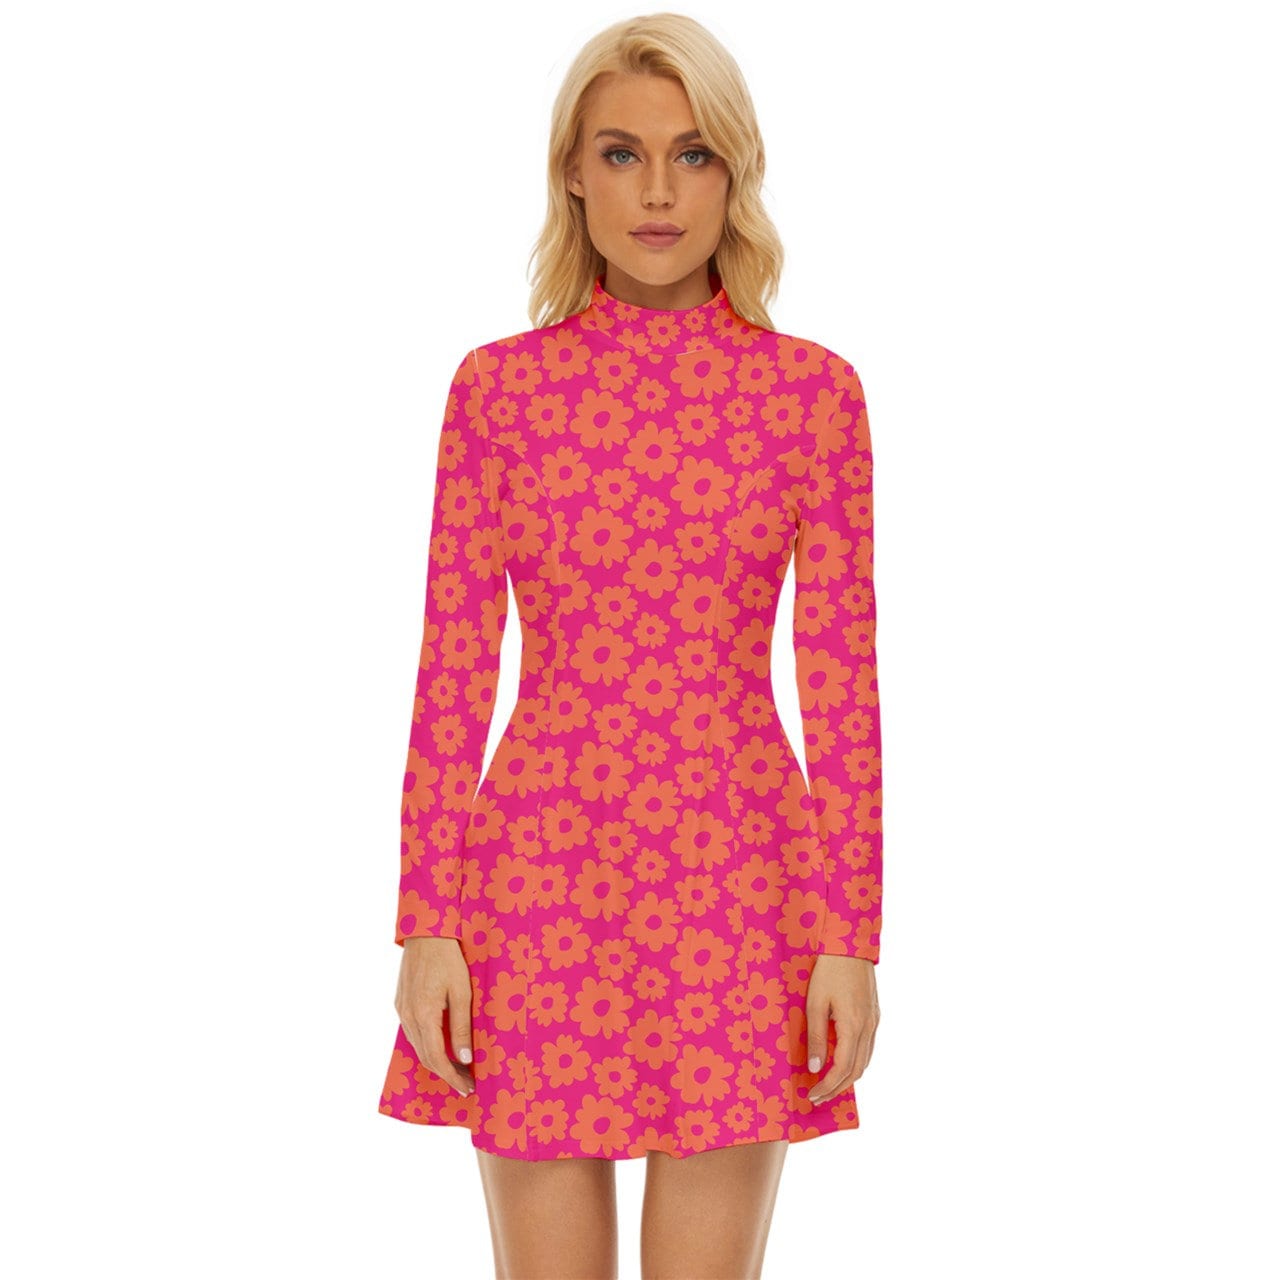 60er-Kleiderstil, Mod-Kleid, rosa Mod-Kleid, Rollkragenkleid, GOGO-Kleid, Kleid im 60er-Jahre-Stil, 60er-Minikleid, Blumenkleid, Retro-Kleid